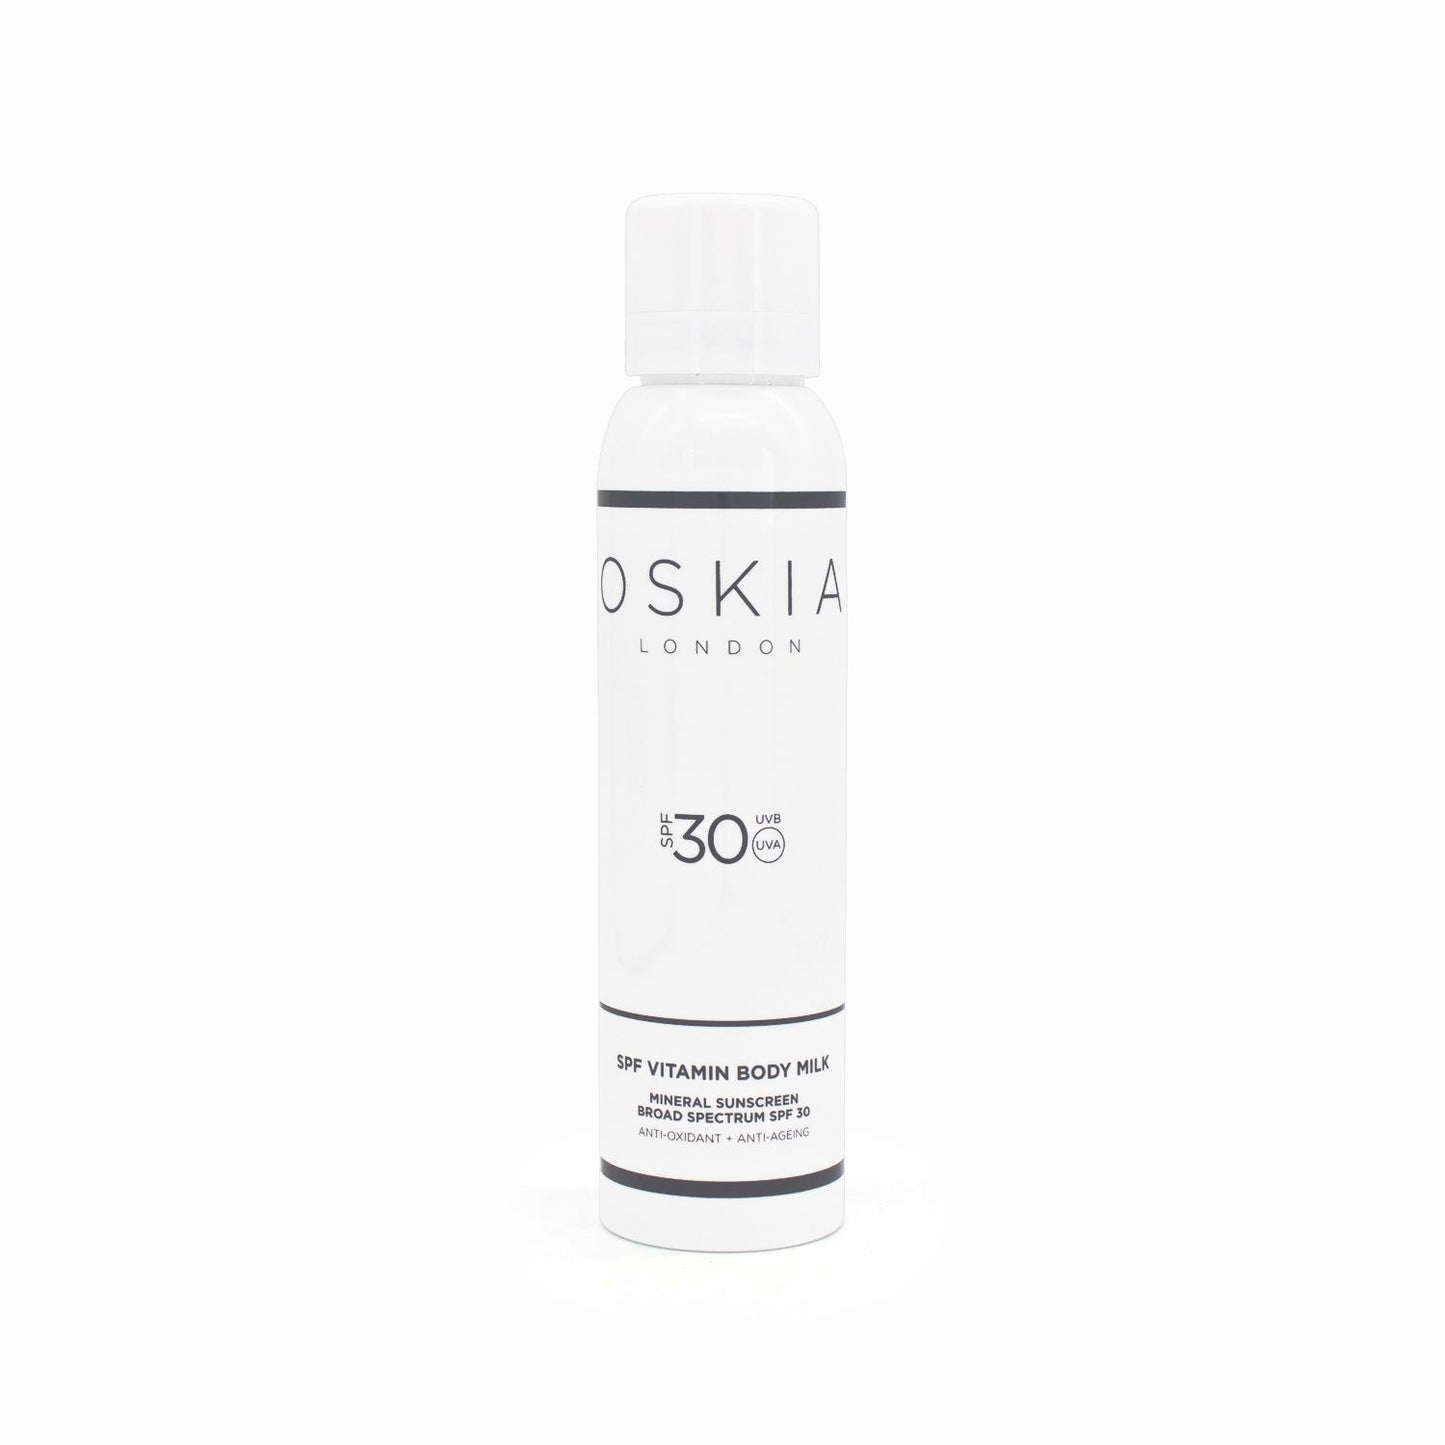 Oskia SPF30 Vitamin Body Milk Sunscreen 200ml - Missing Box